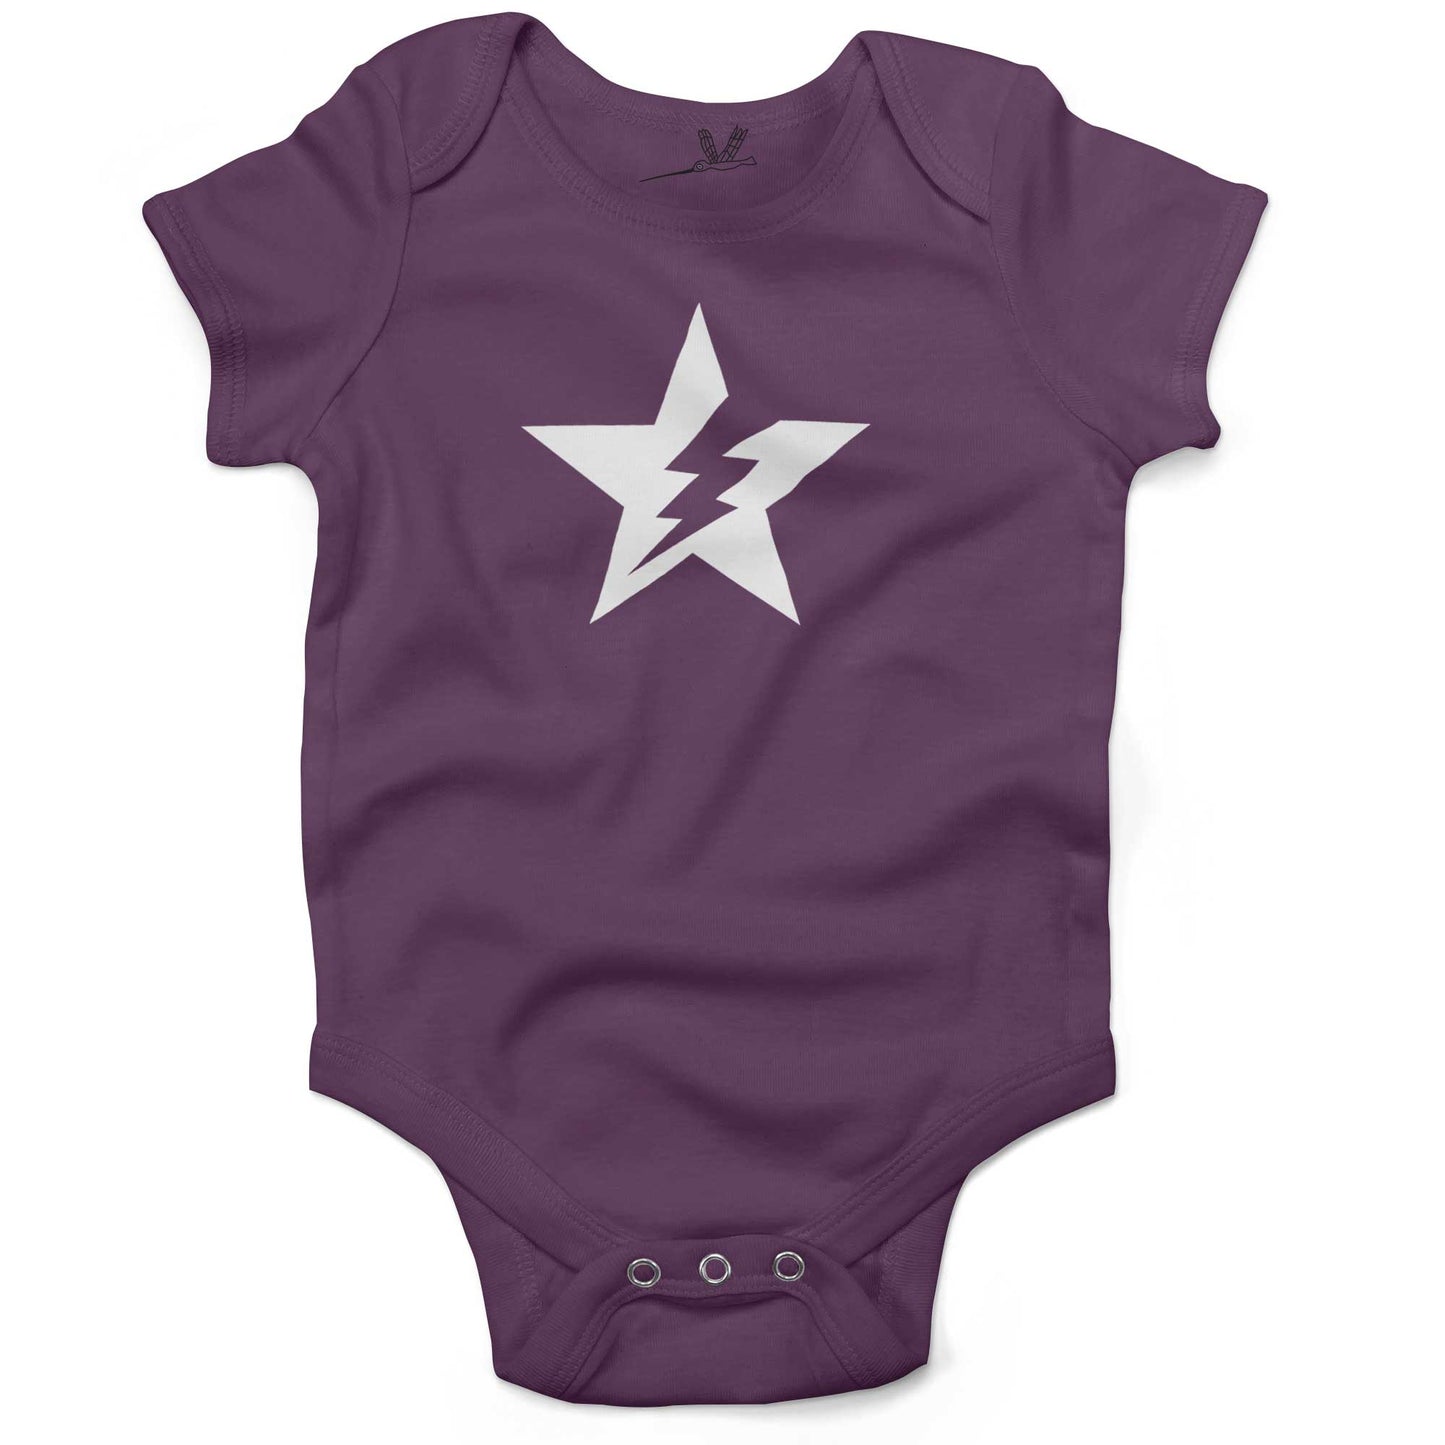 Star Bolt Infant Bodysuit or Raglan Baby Tee-Organic Purple-3-6 months